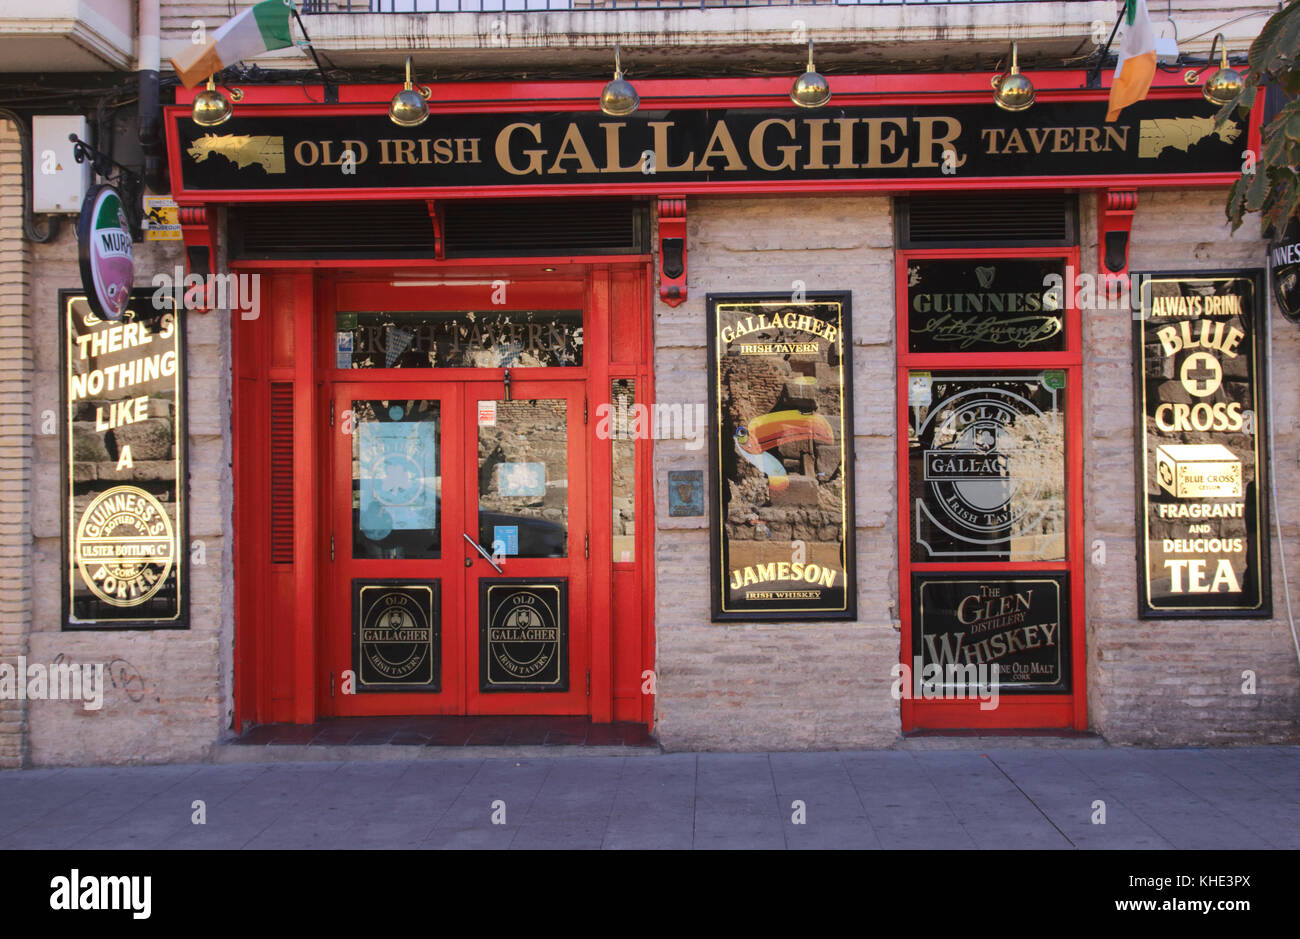 Old Irish Gallagher Tavern Zaragoza Spain Stock Photo